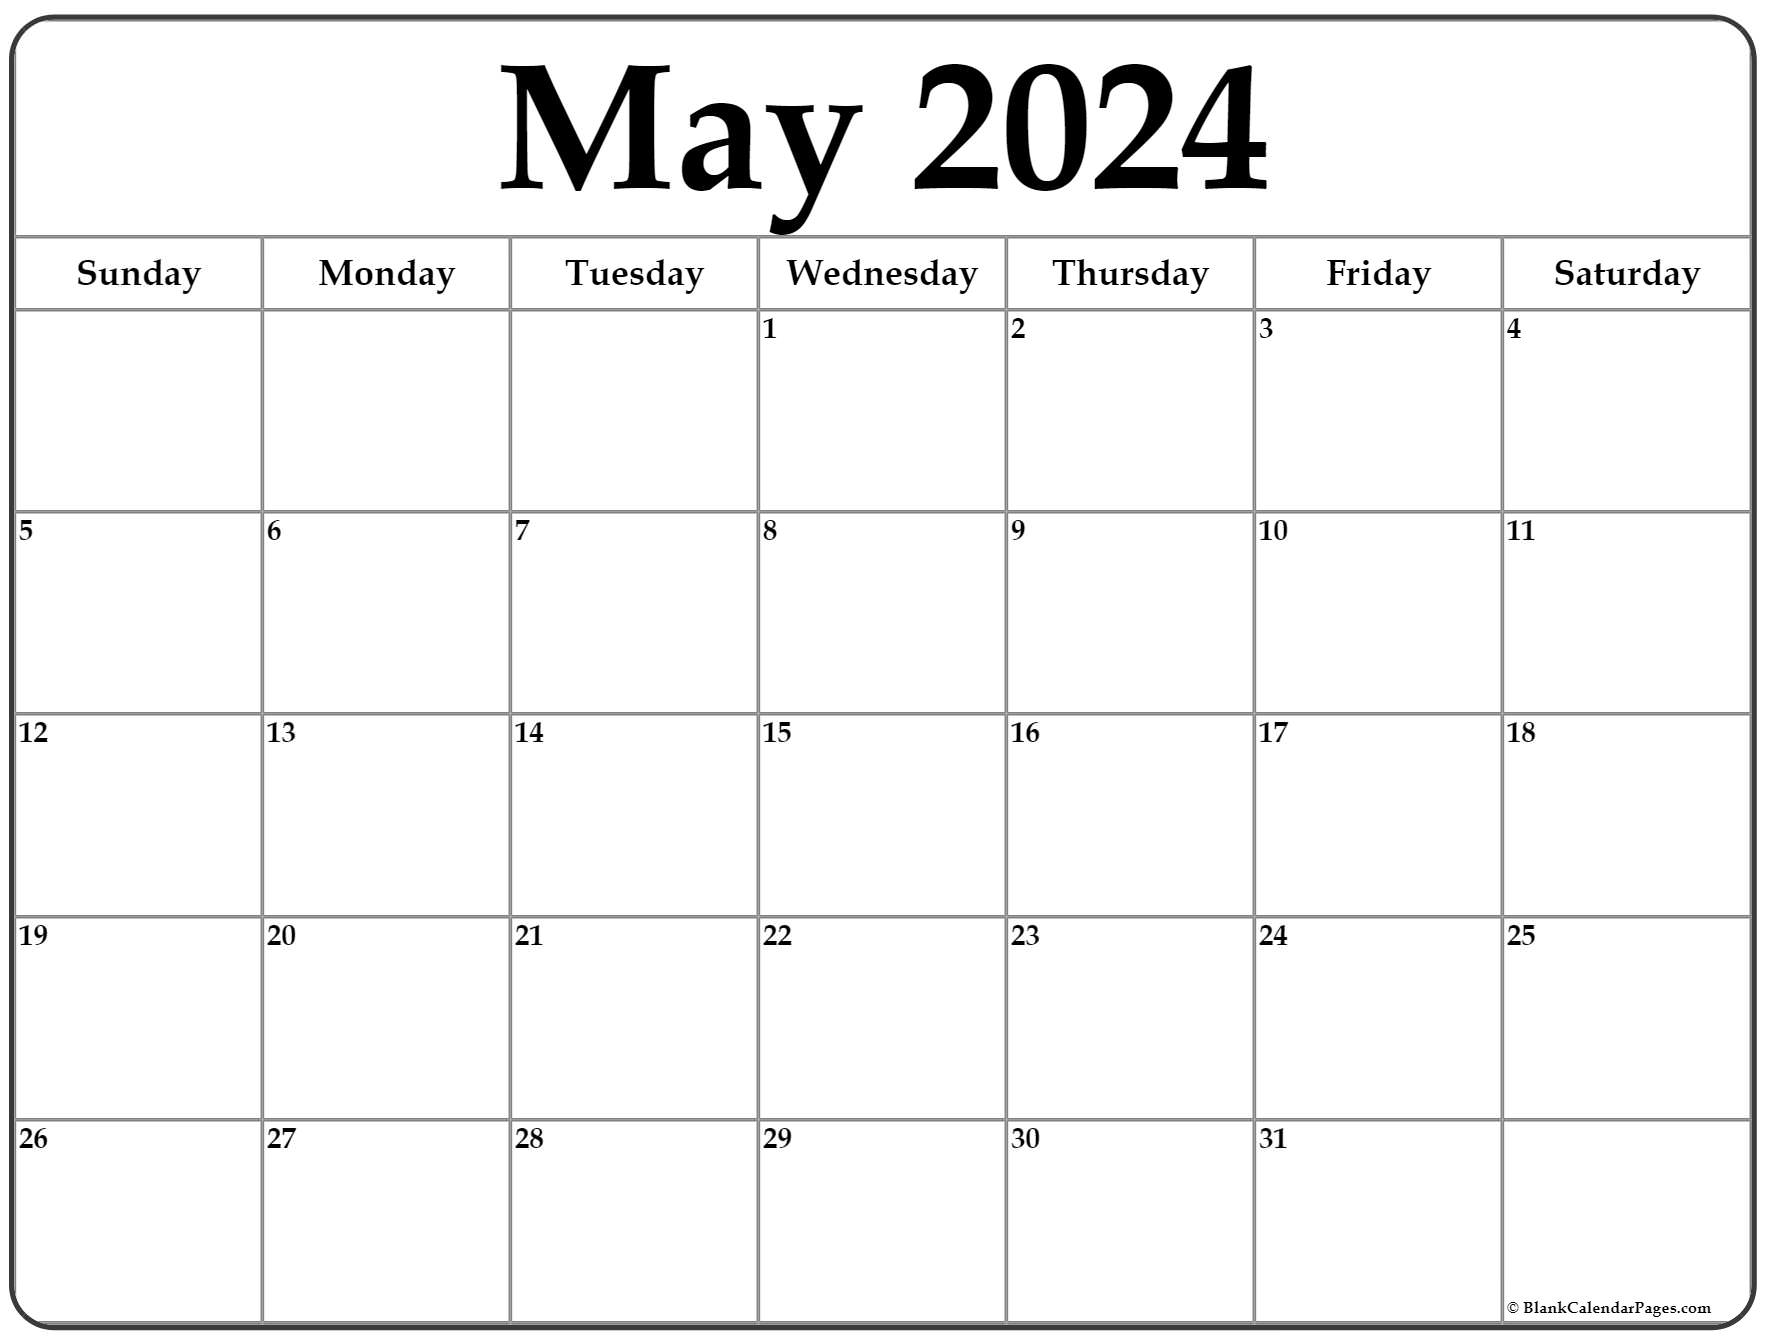 May 2022 Printable Calendar May 2022 Calendar | Free Printable Calendar Templates